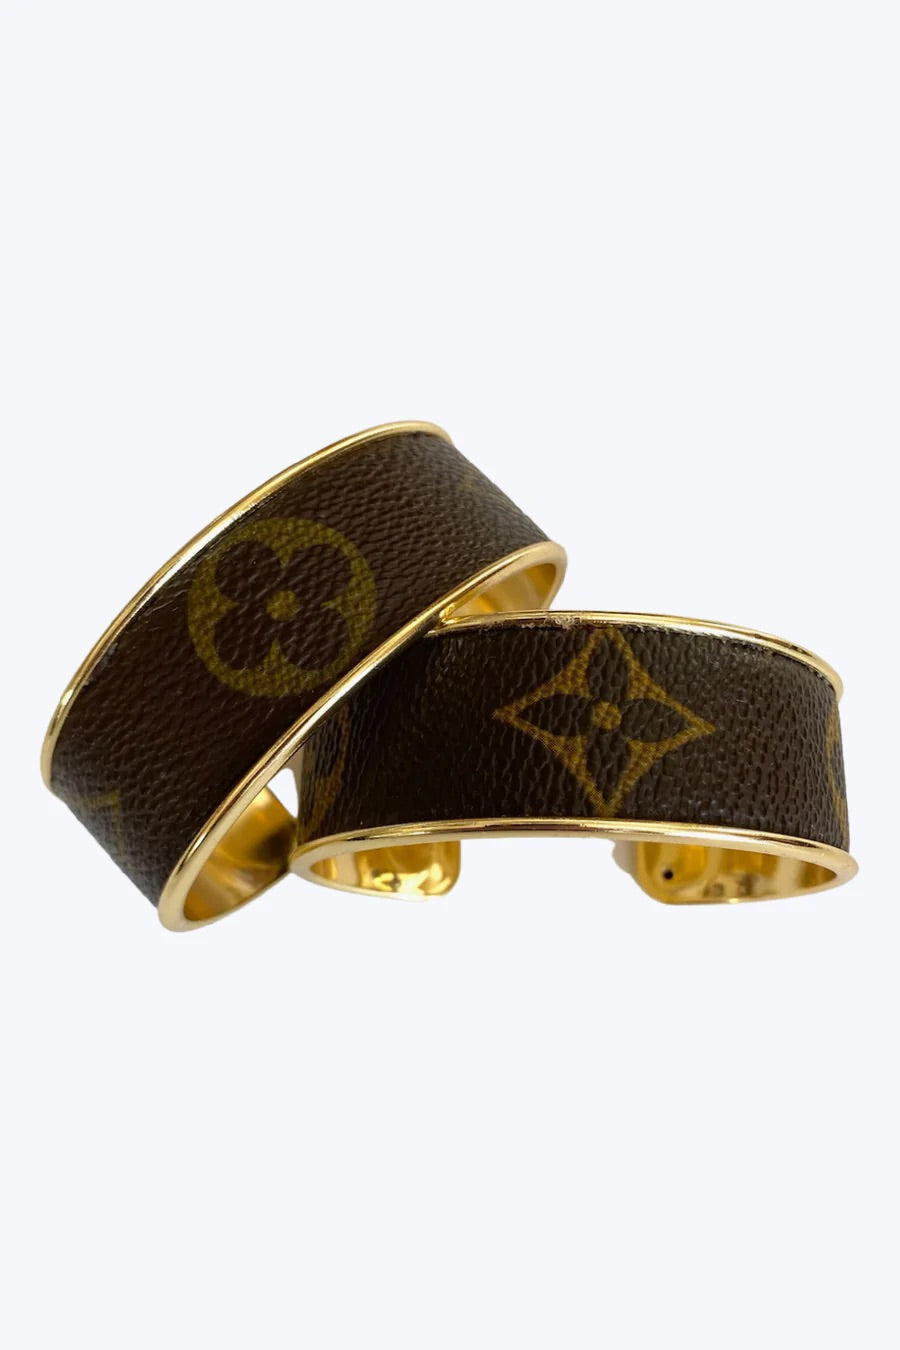 Repurposed Stylish Louis Vuitton bracelet - Dreamized